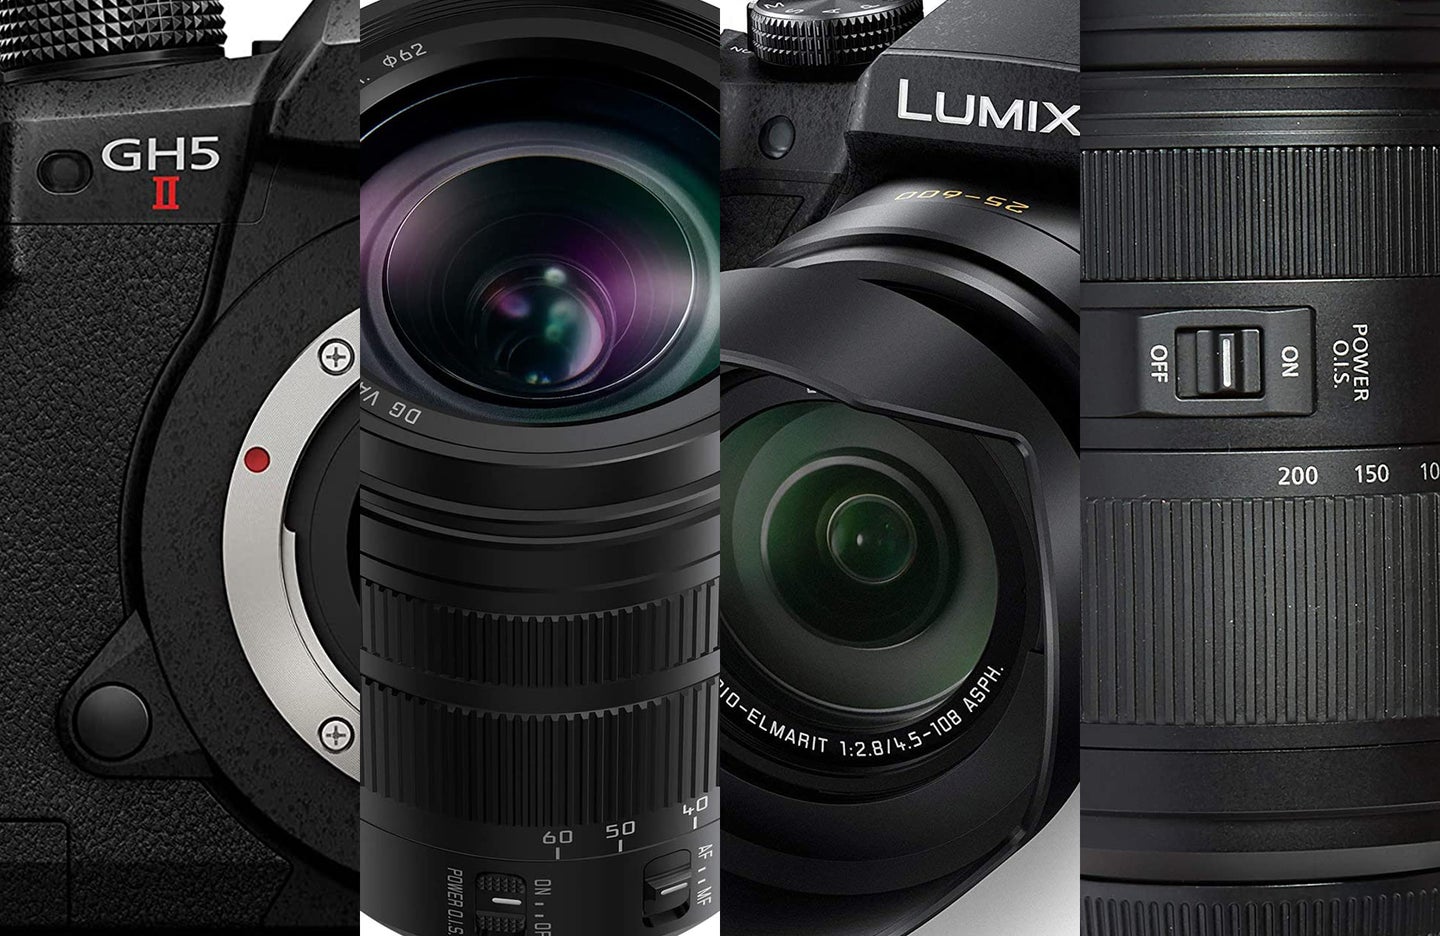 Panasonic cameras and lenses